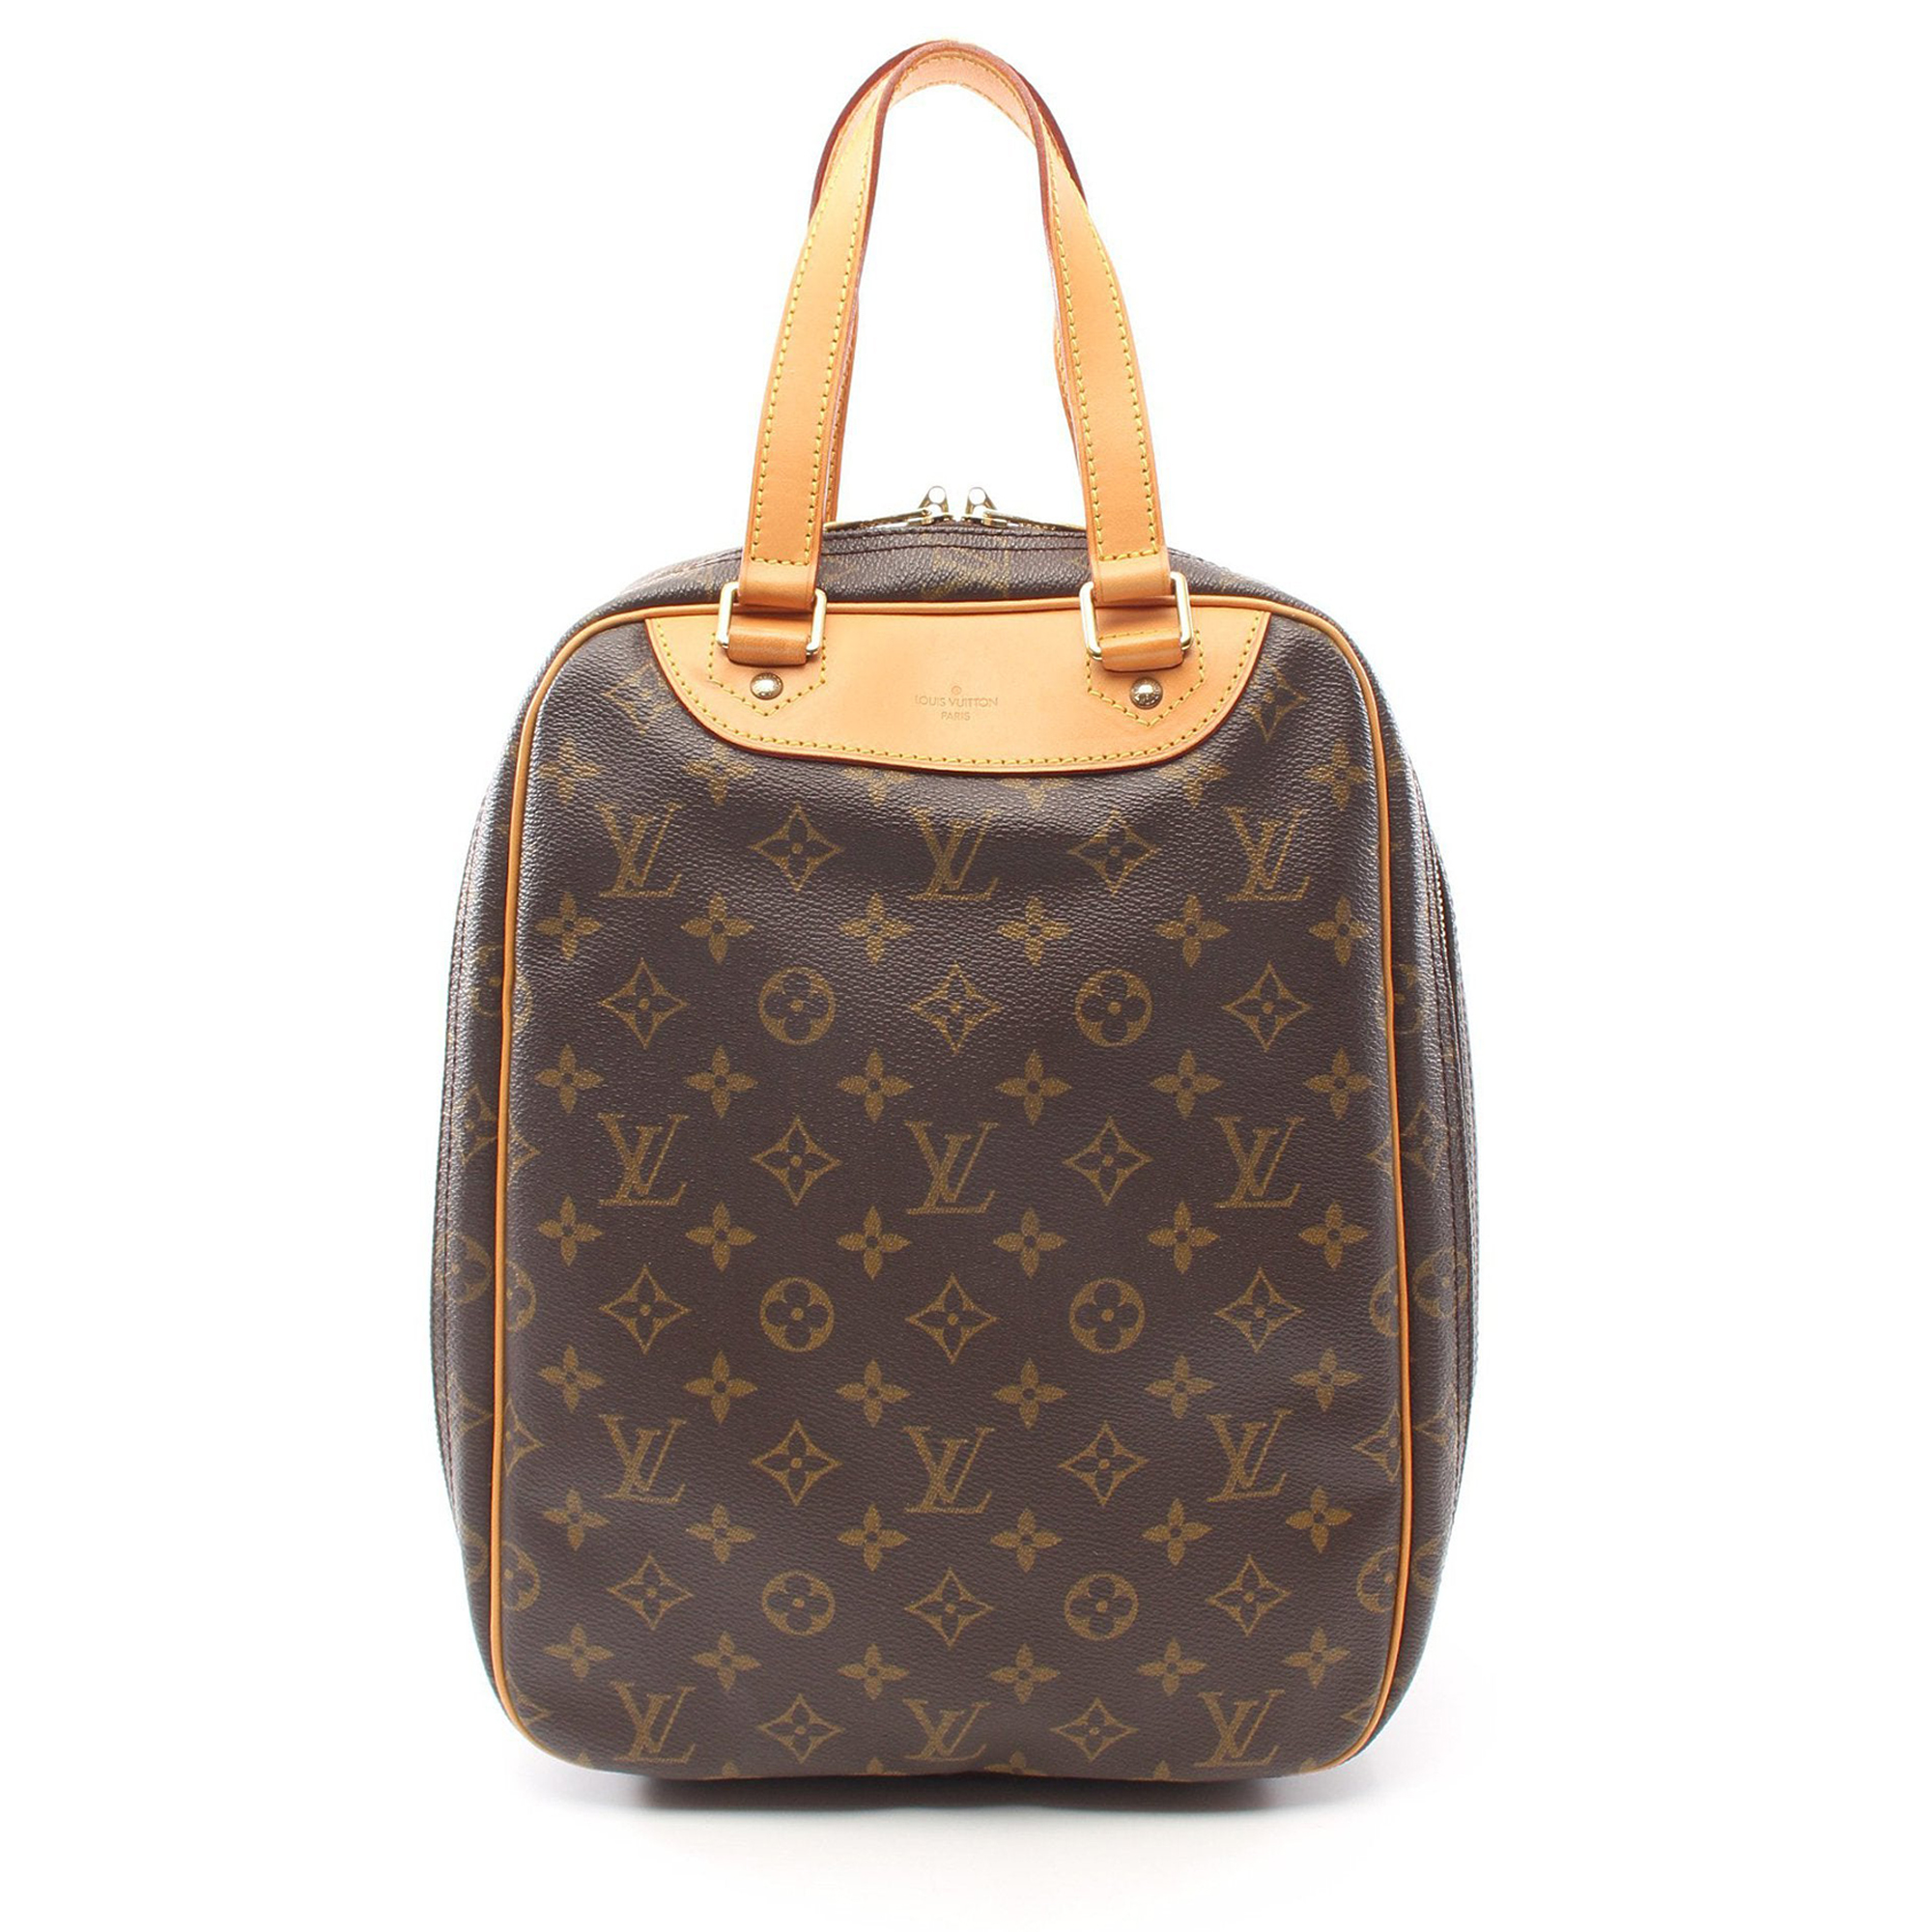 Louis vuitton excursion monogram handbag pvc leather brown